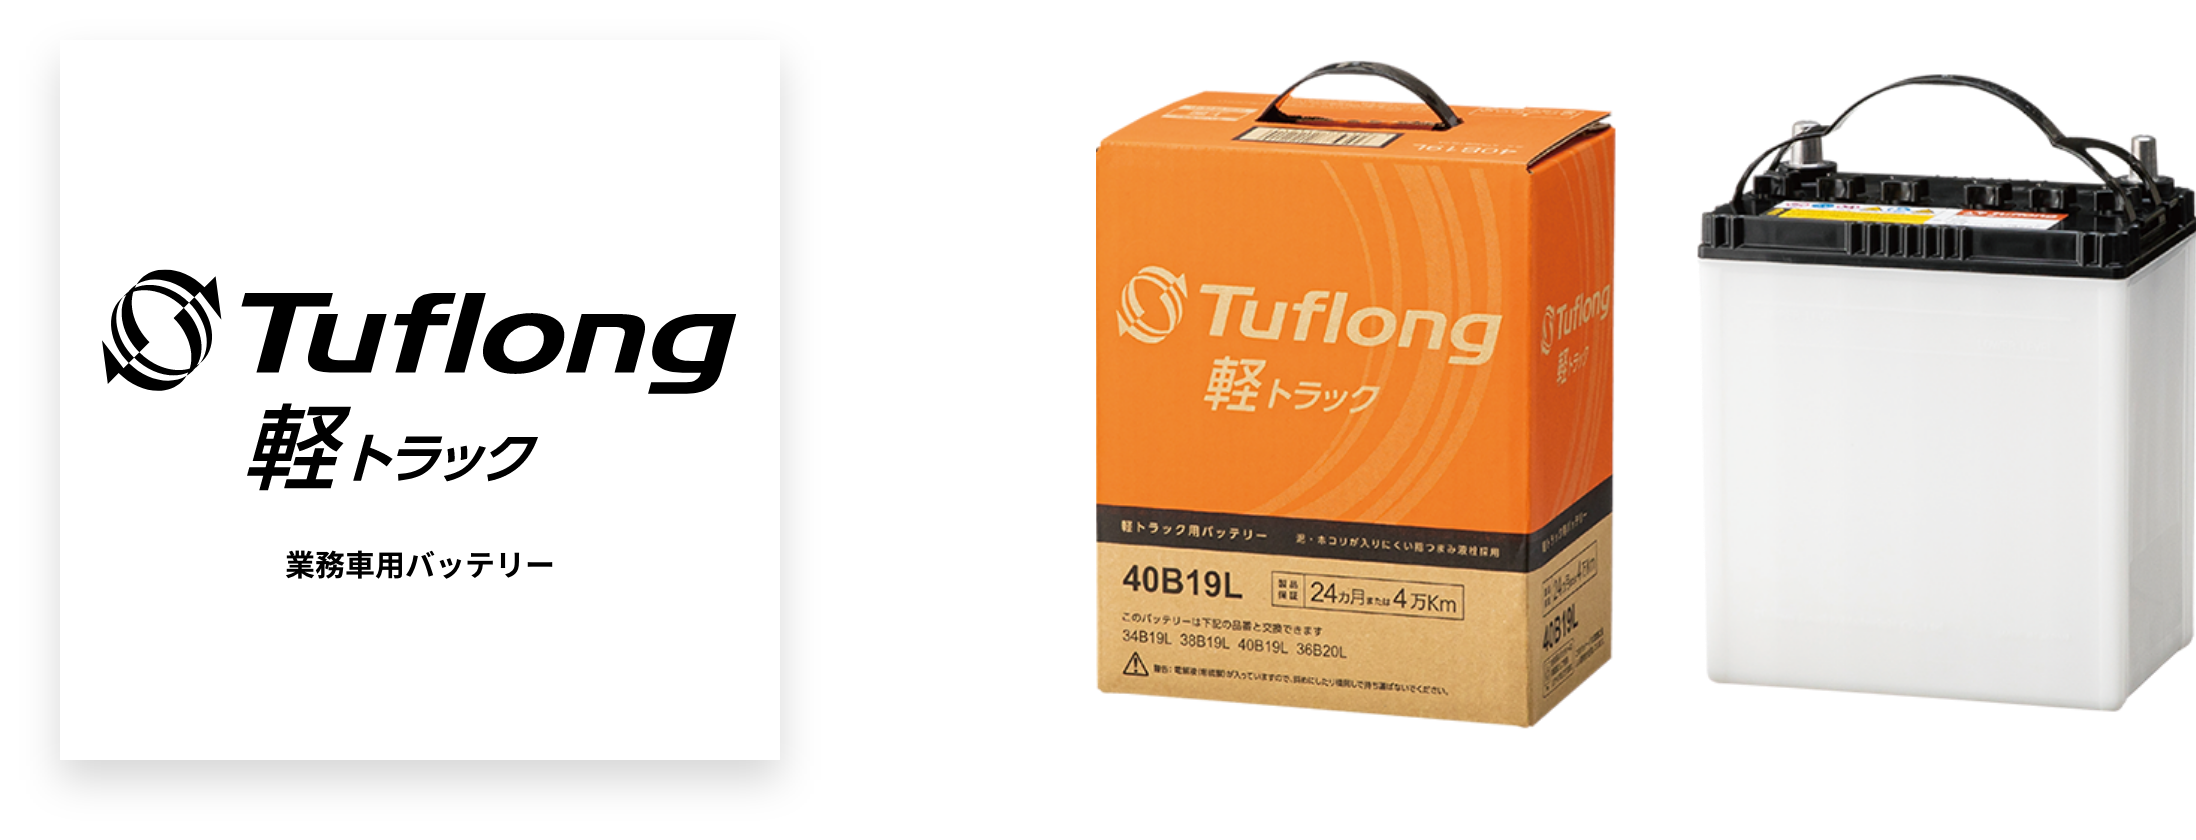 Tuflong 軽トラック - エナジーウィズ株式会社